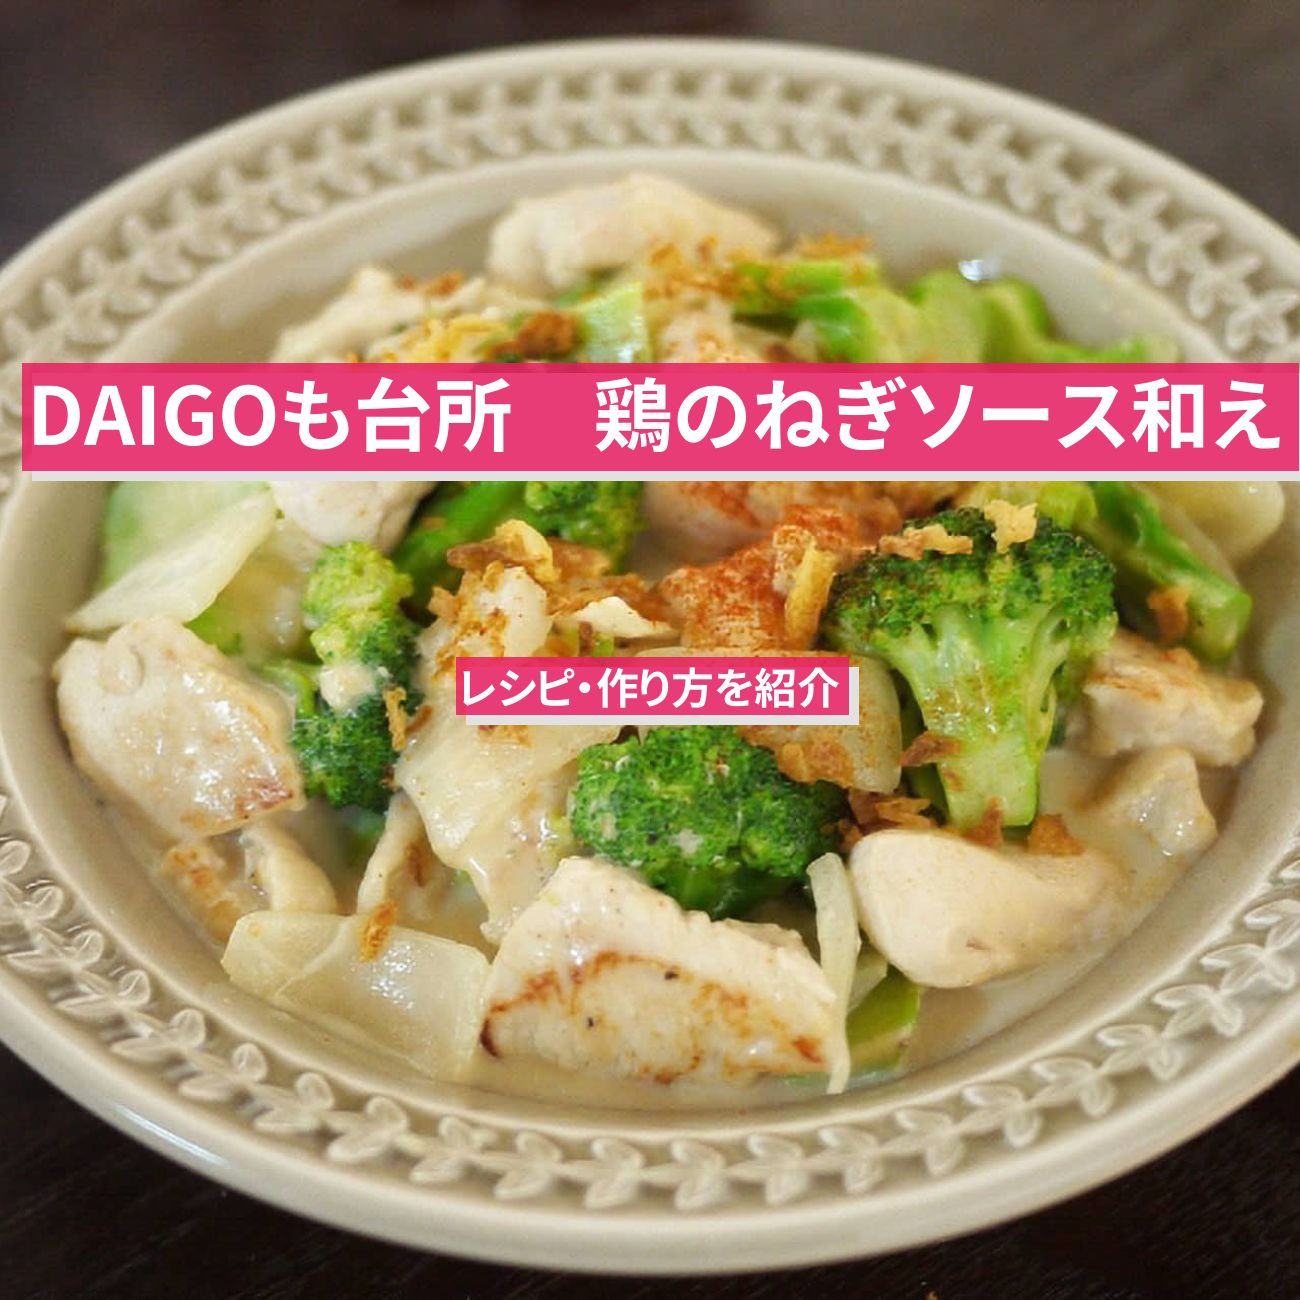 【DAIGOも台所】『鶏のねぎソース和え』のレシピ・作り方を紹介〔ダイゴも台所〕